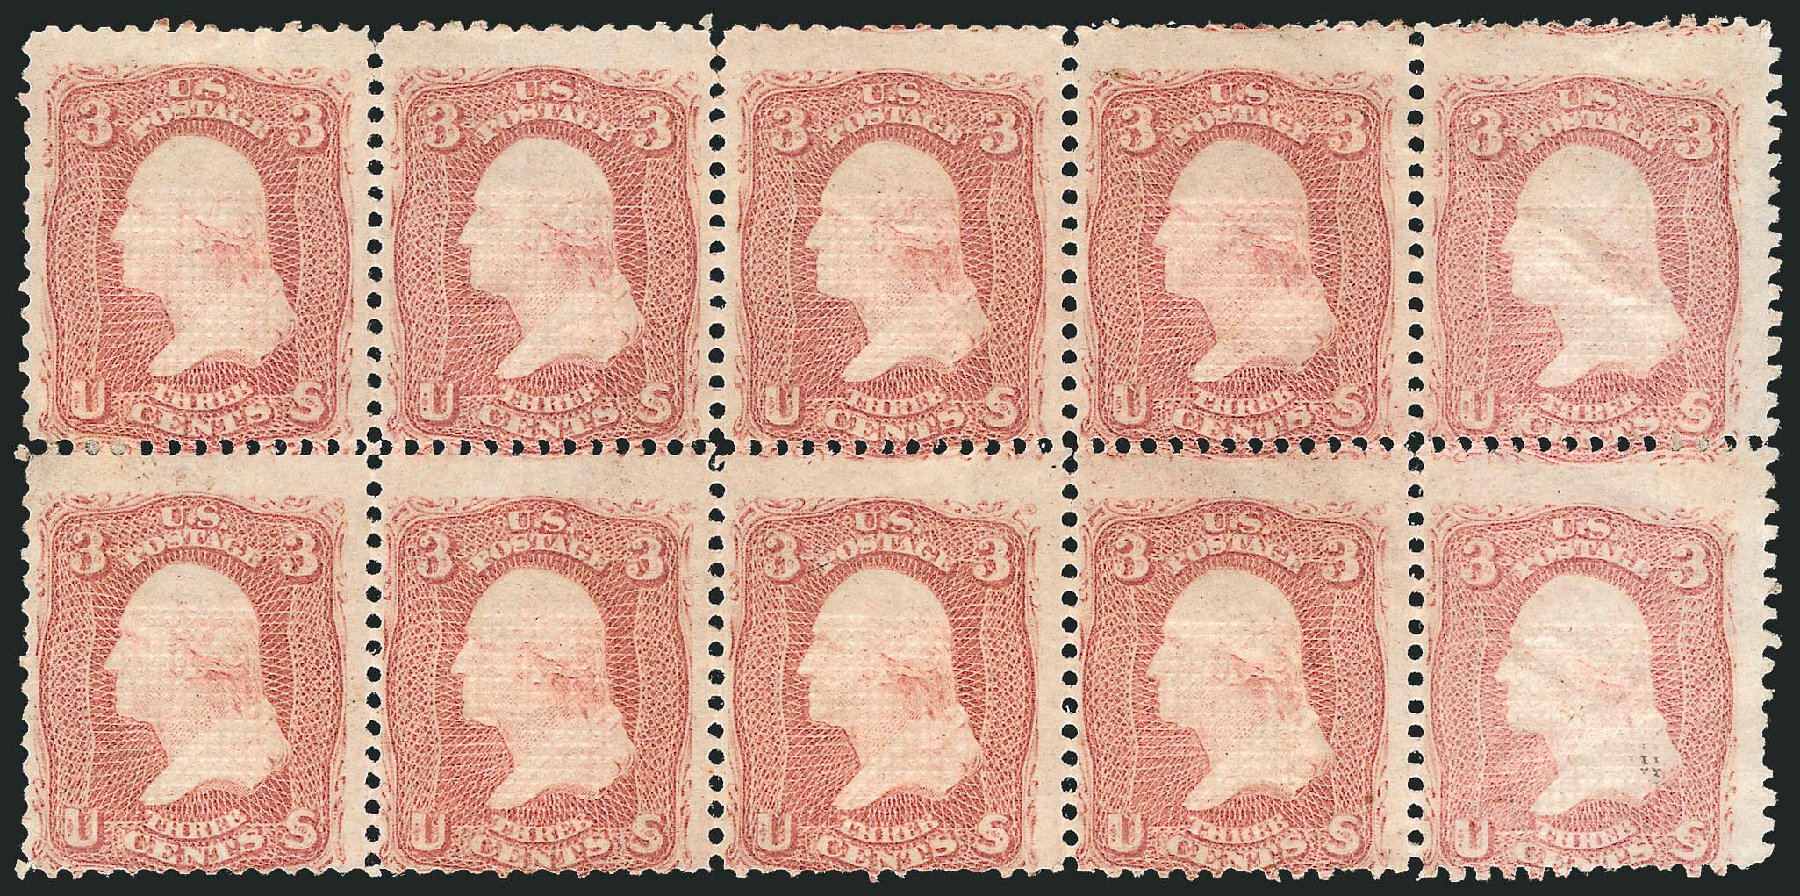 US Stamps Values Scott Catalogue #88 - 1868 3c Washington Grill. Robert Siegel Auction Galleries, Nov 2014, Sale 1084, Lot 3261